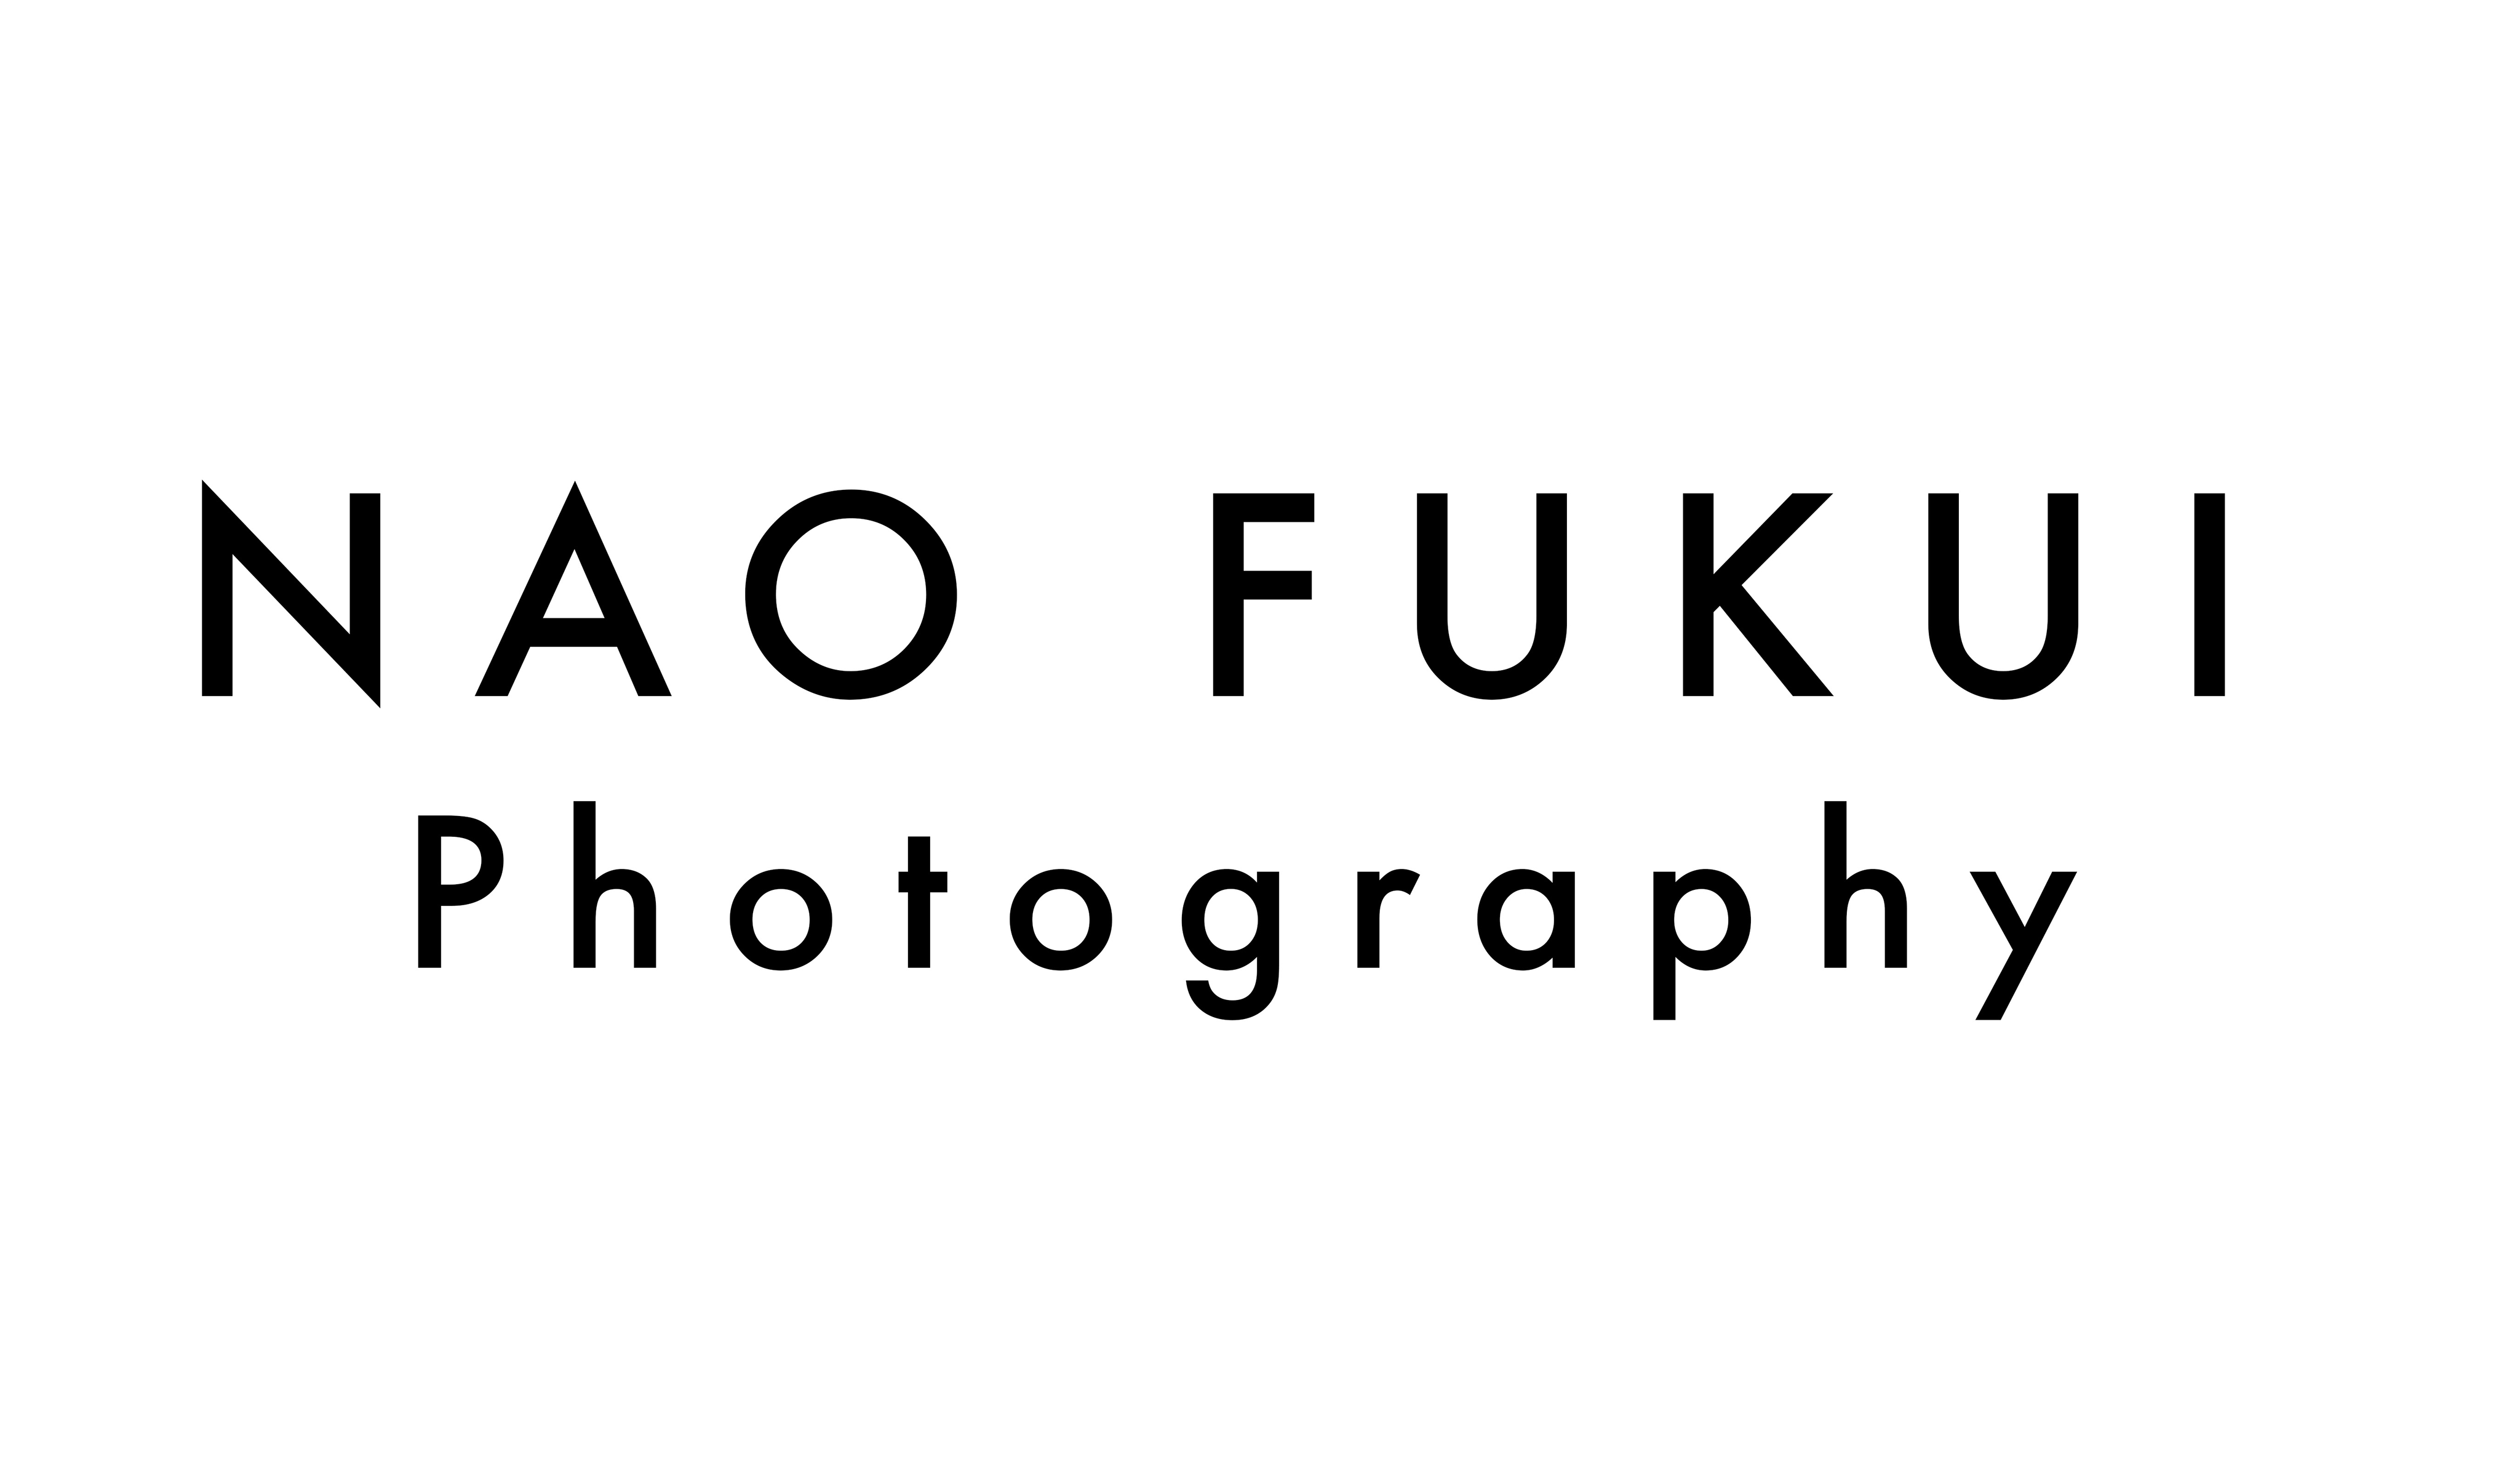 Nao Fukui